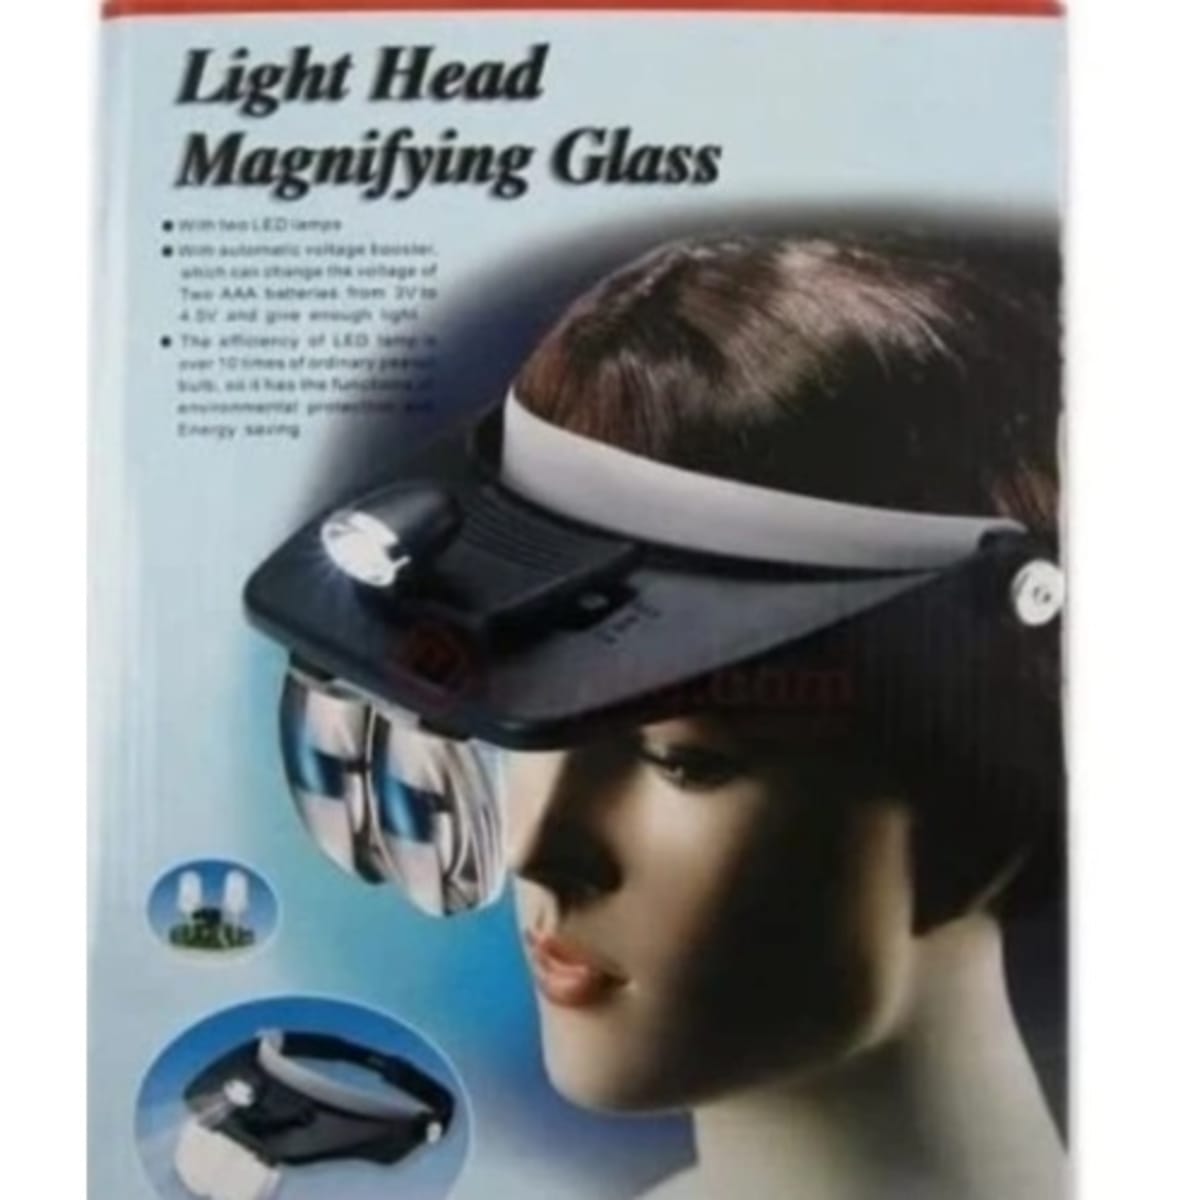 Light Head Magnifying Glass